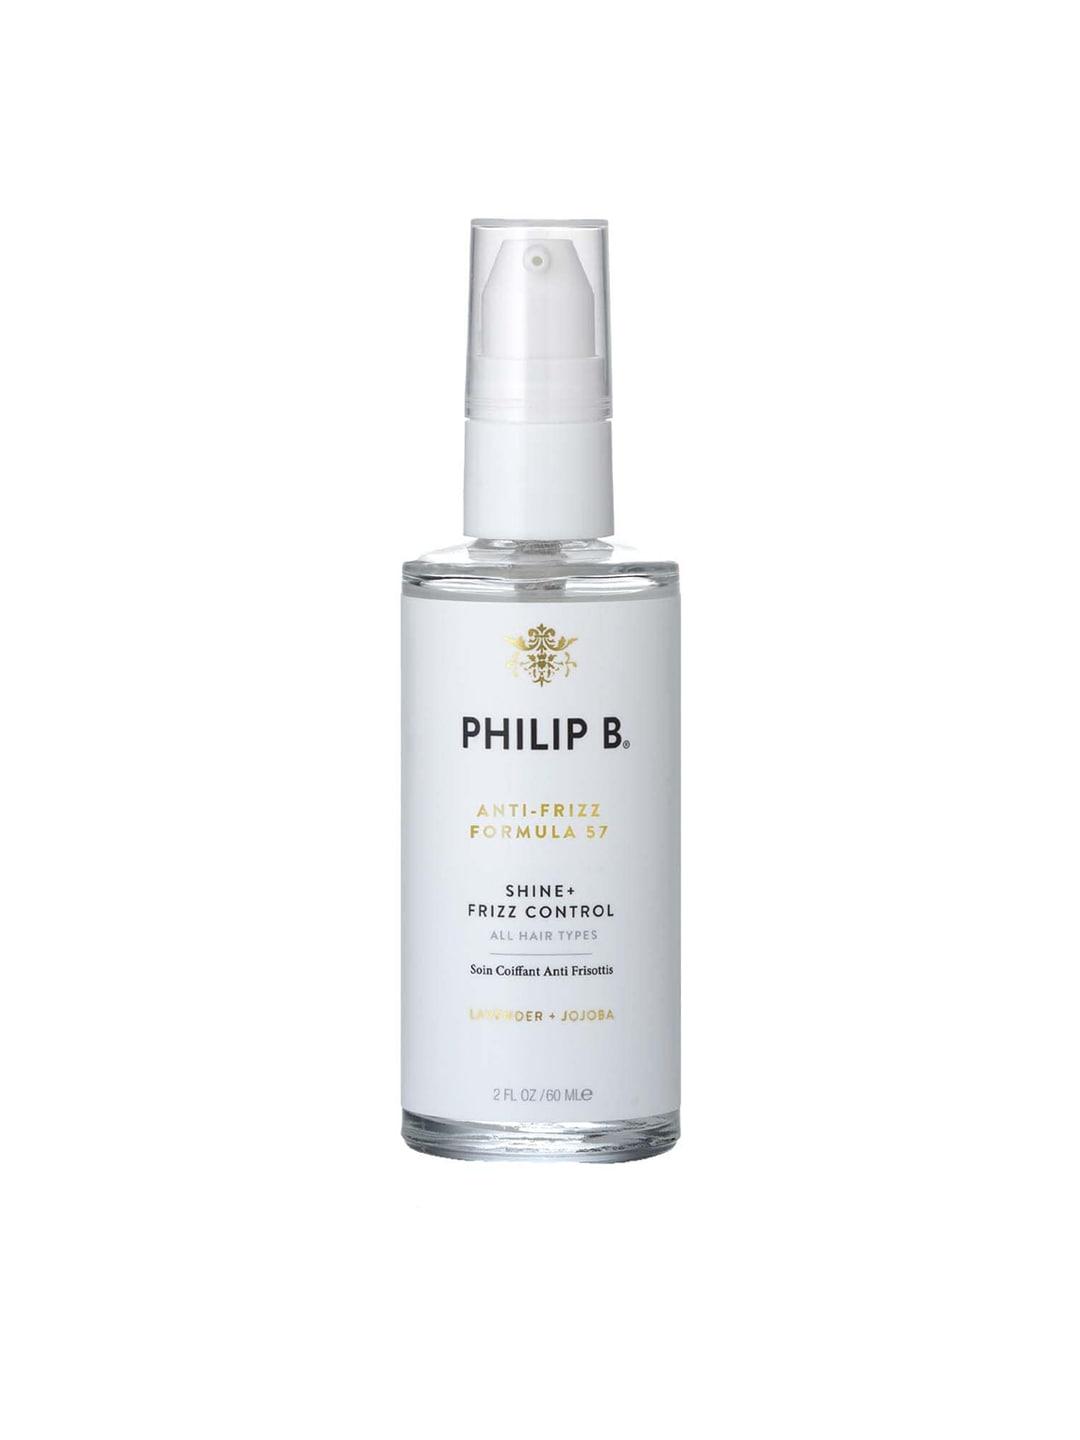 philip-b-anti-frizz-formula-57-shine-+-frizz-control-hair-spray---60ml